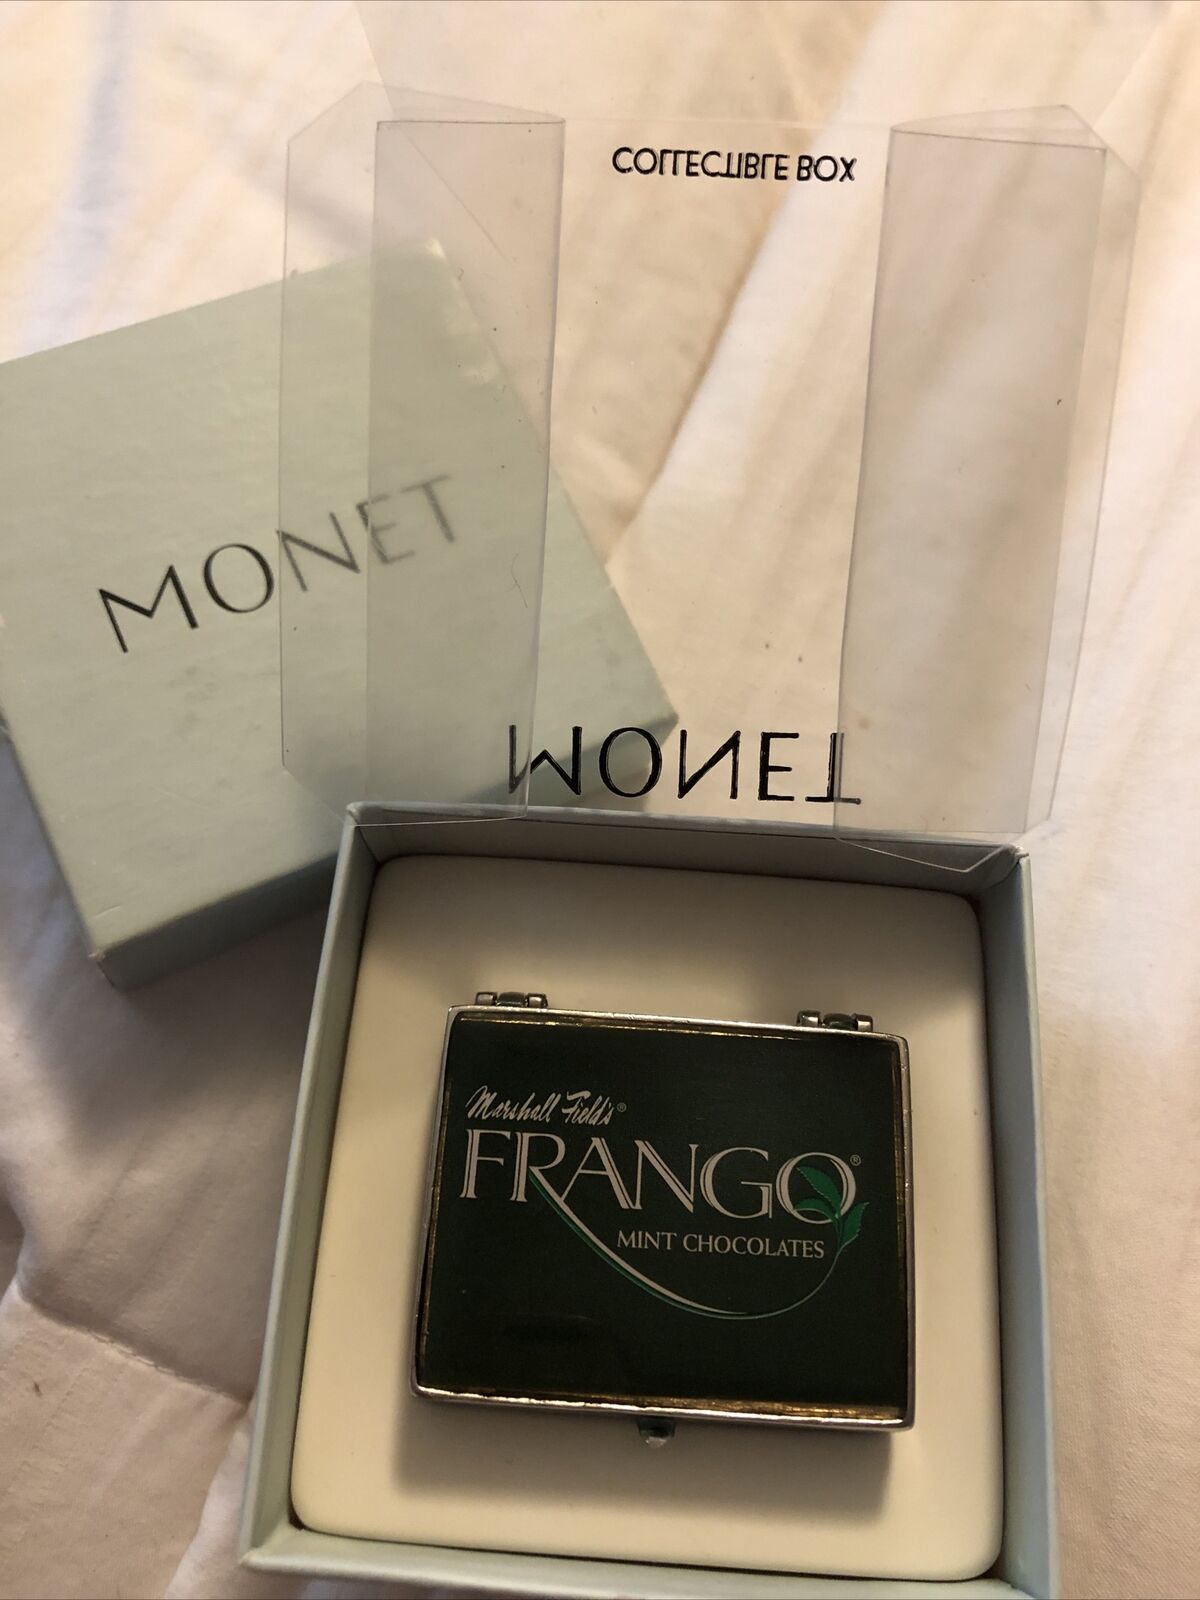 Monet Frango Mint Enamel Collectible Trinket Box… Vintage Marshall Field’s…Rare